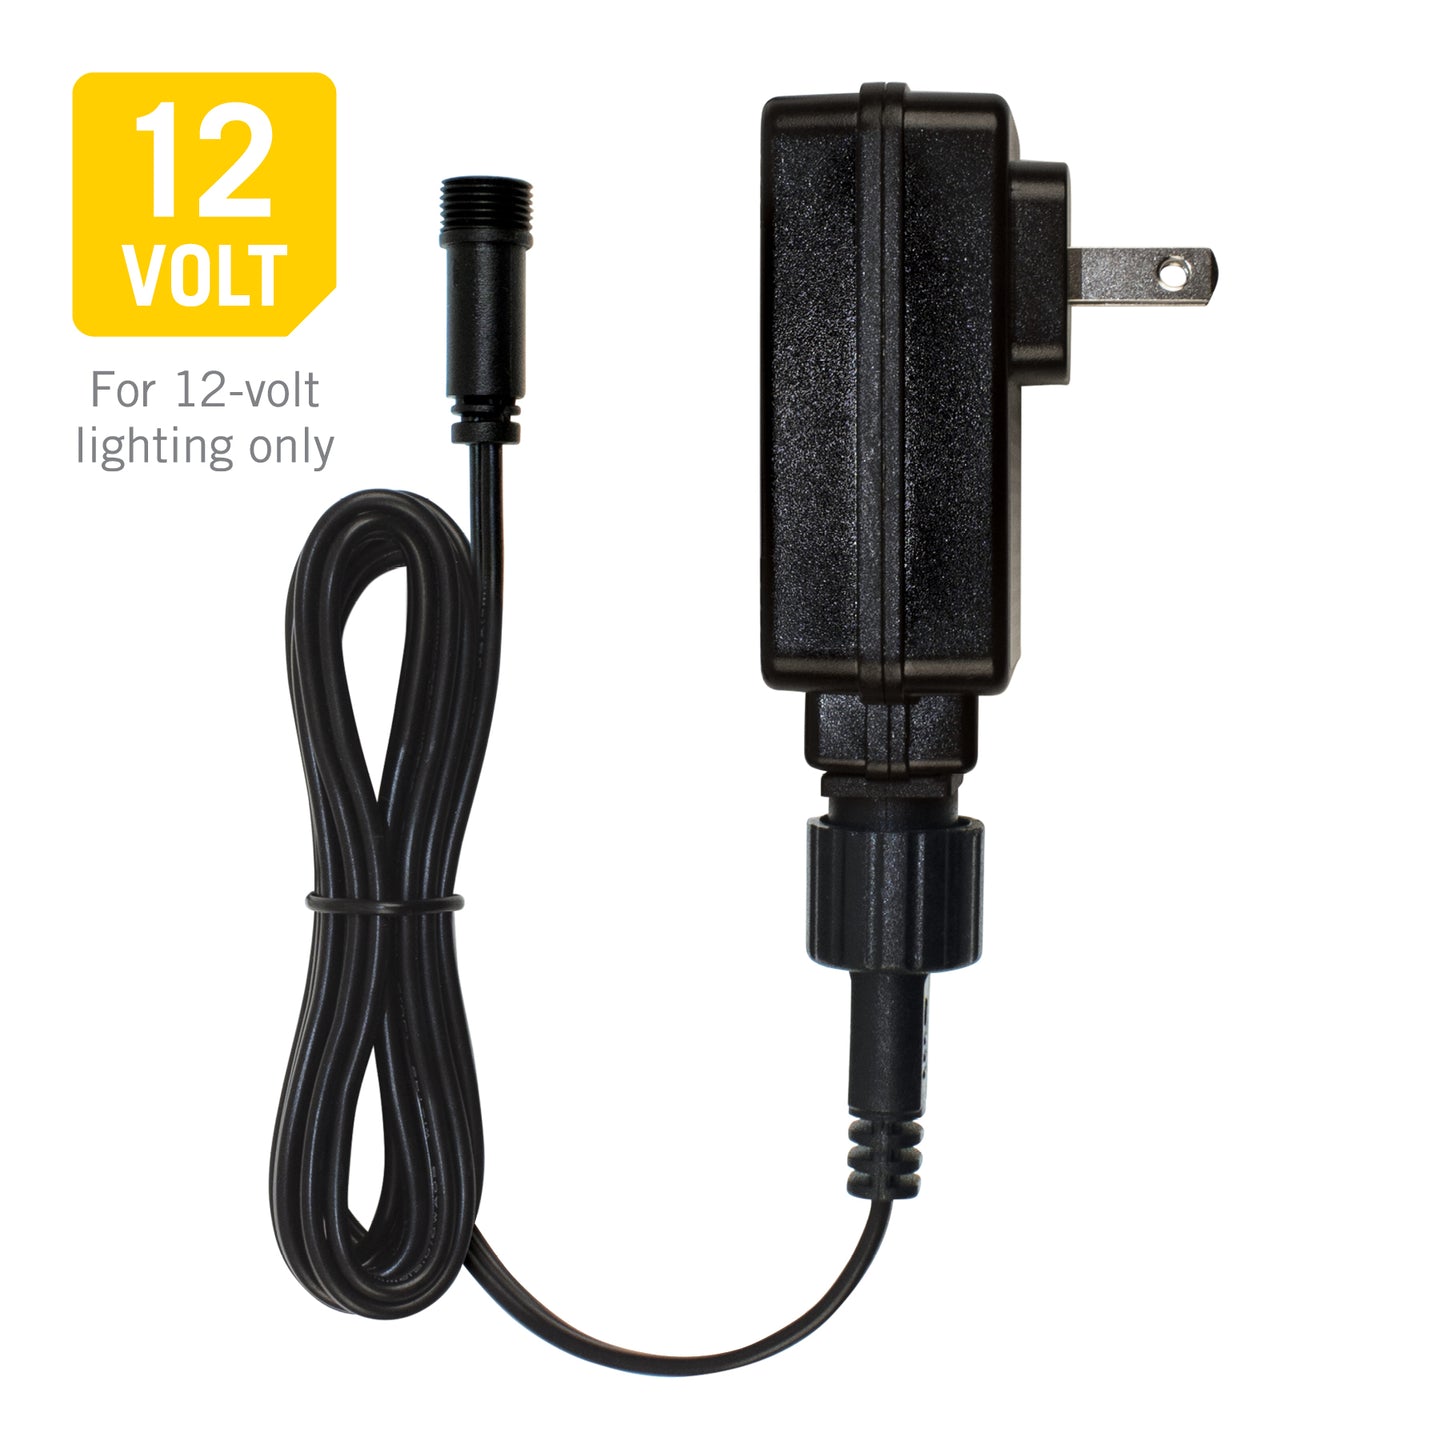 Portico Outdoor LED Driver 12 Volt